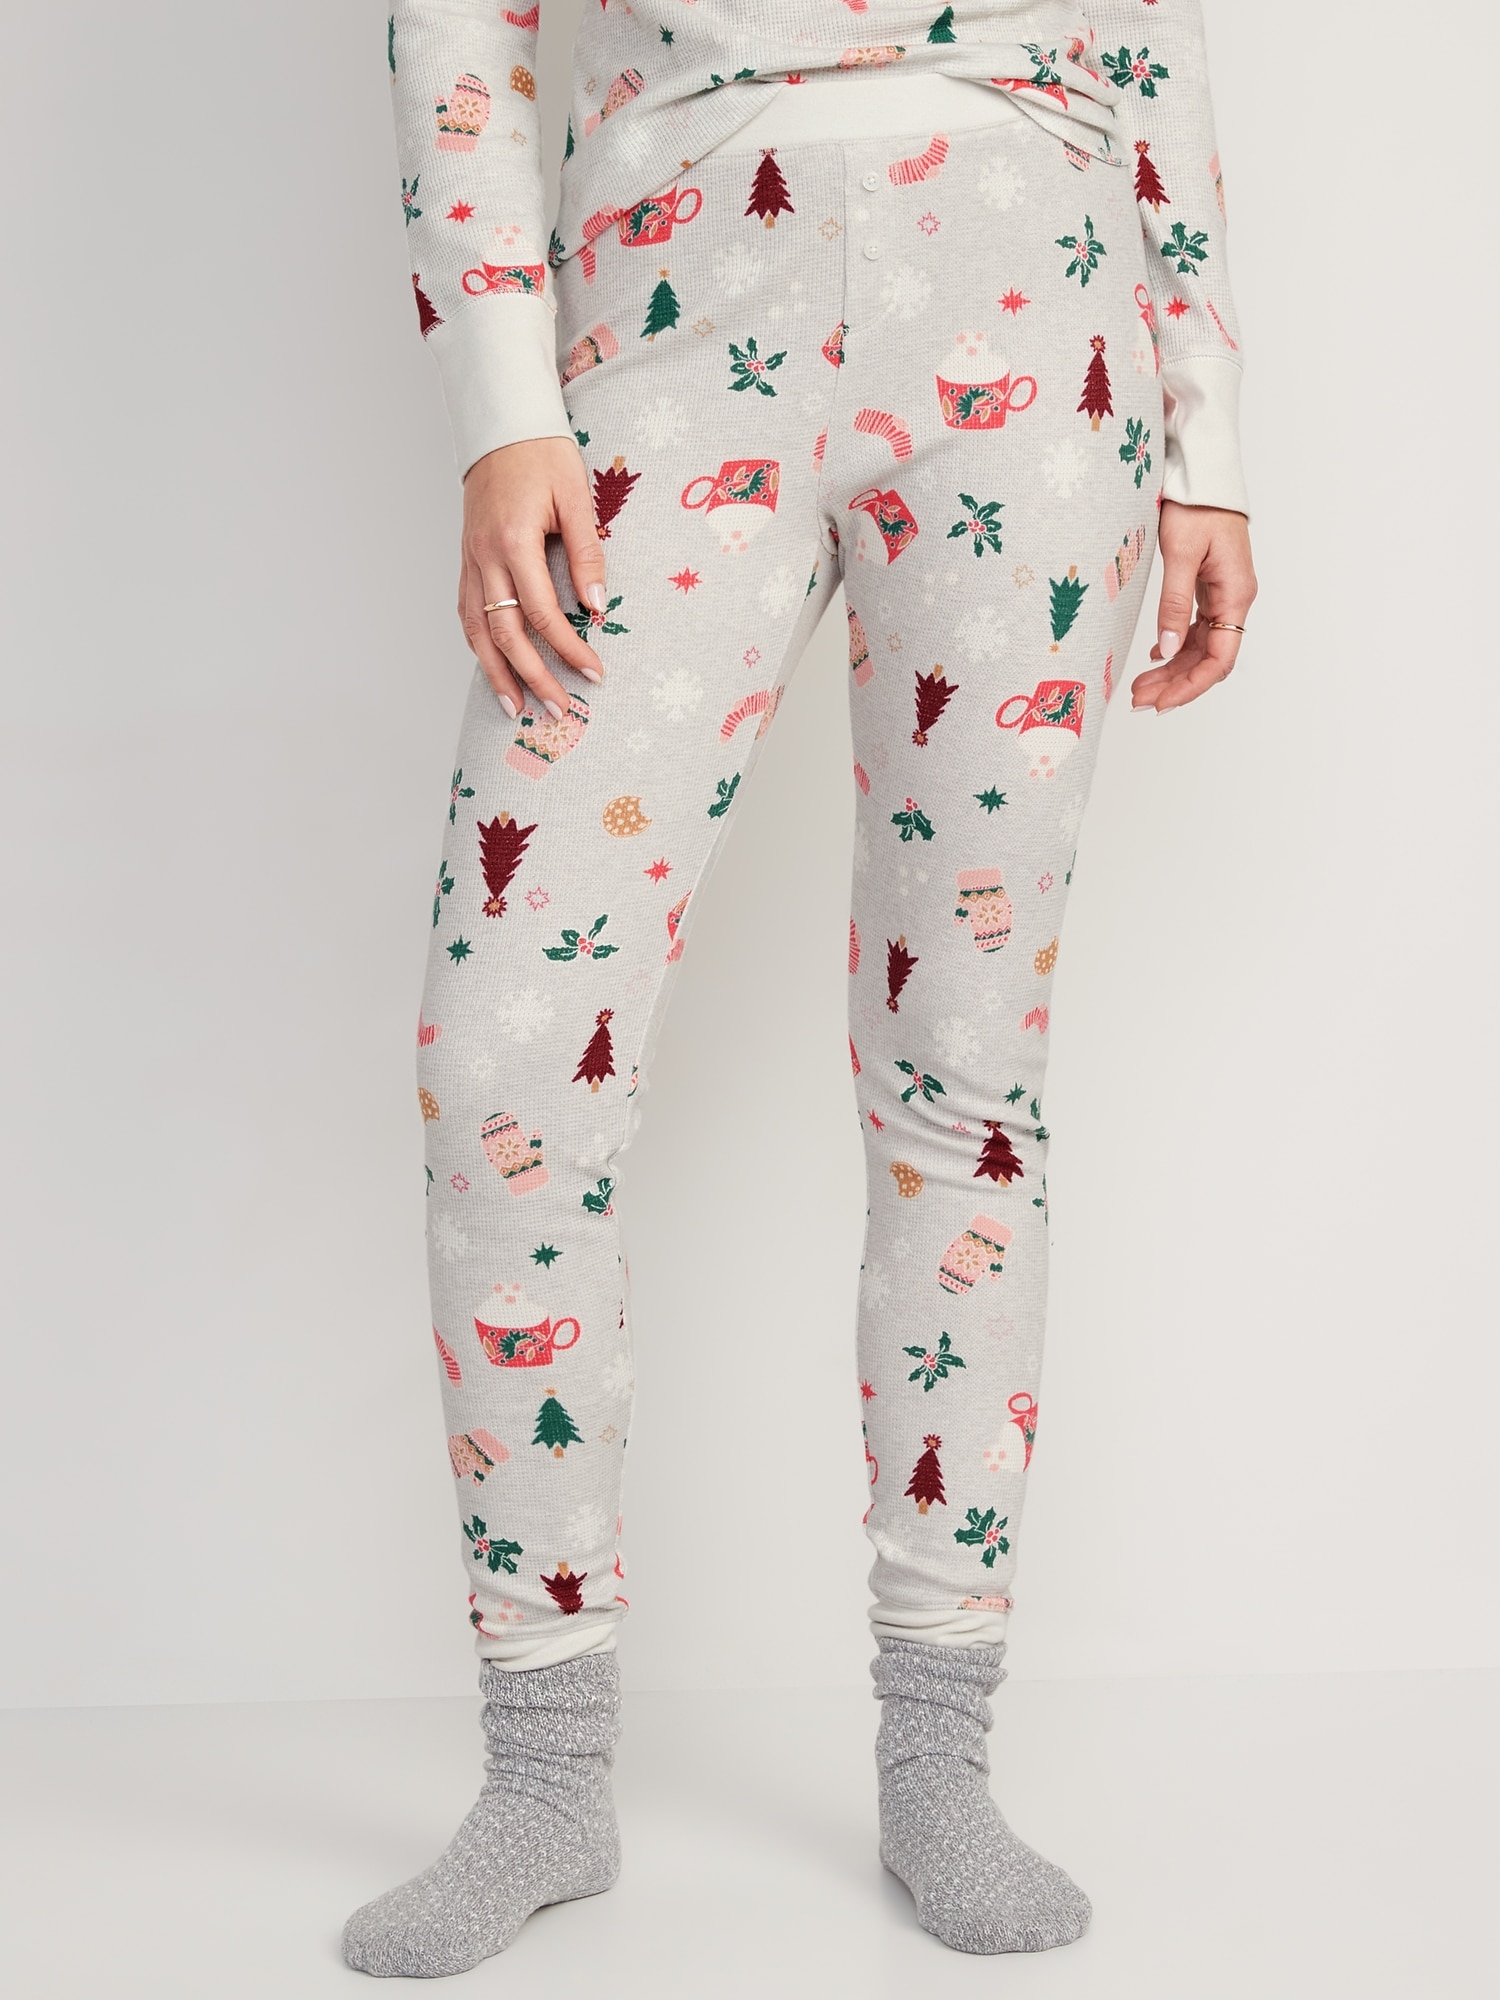 Matching Printed Thermal-Knit Pajama Leggings for Women | Old Navy